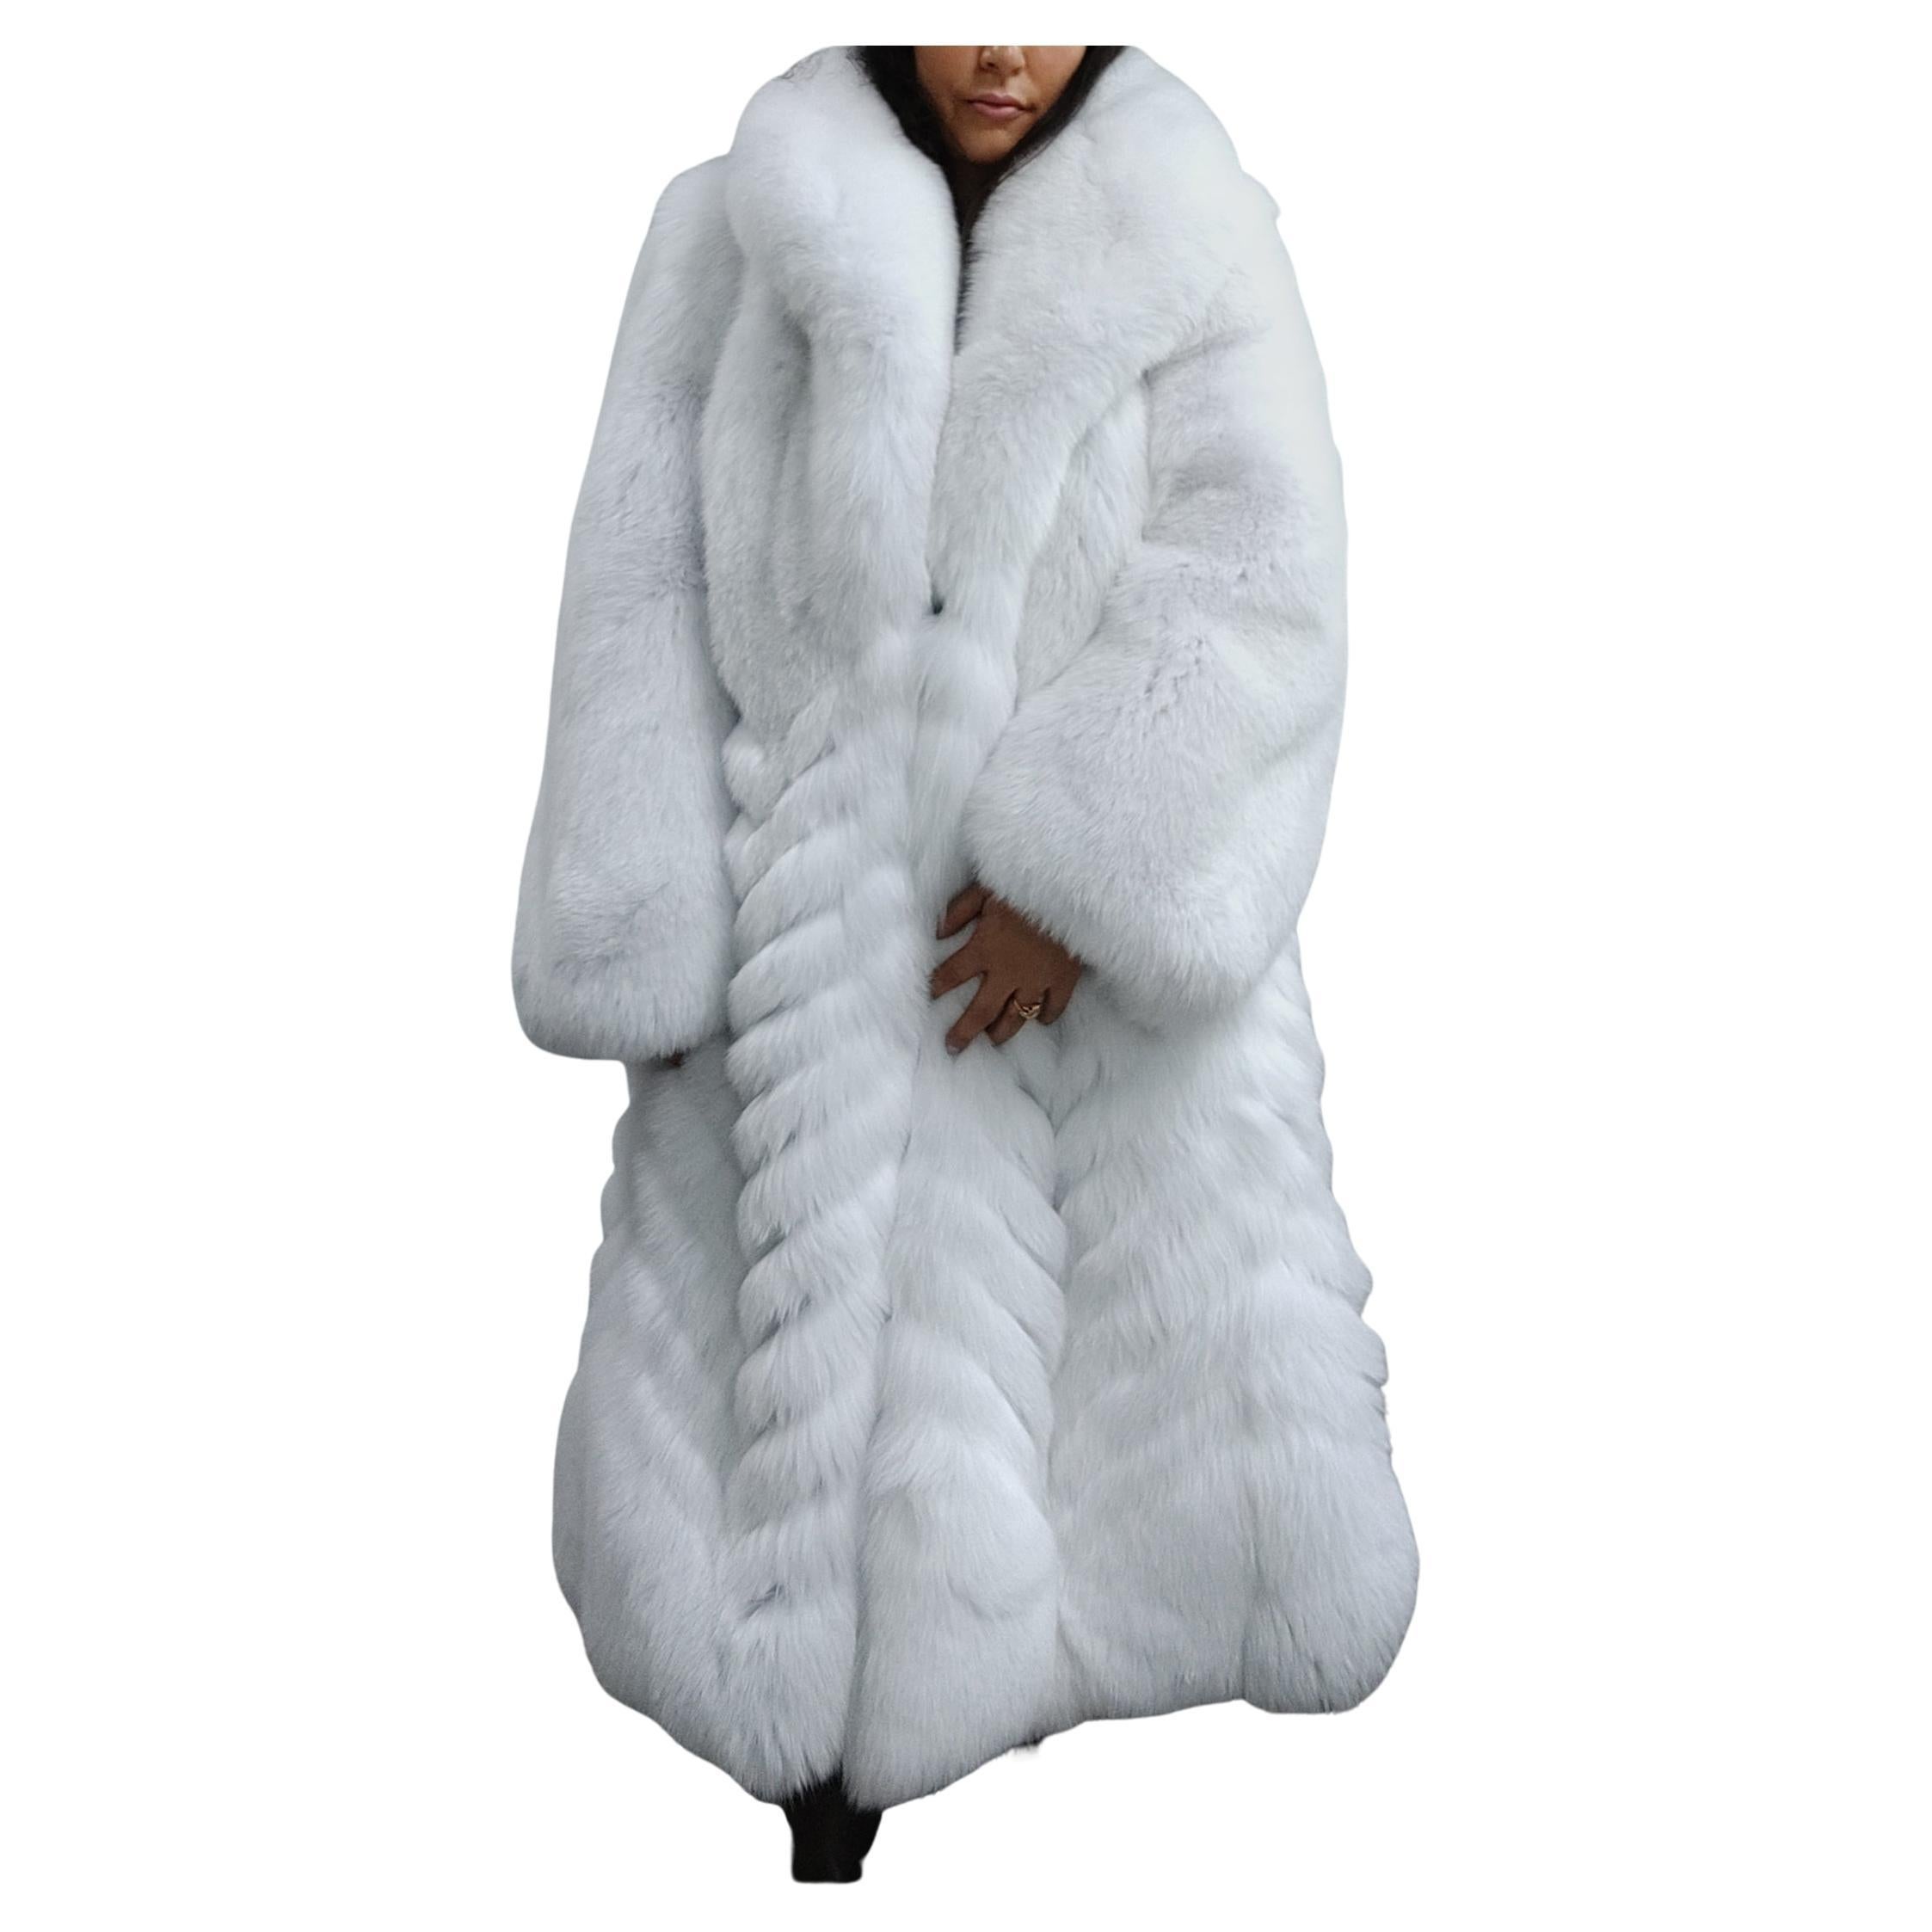 Brand new white fox fur coat size L For Sale